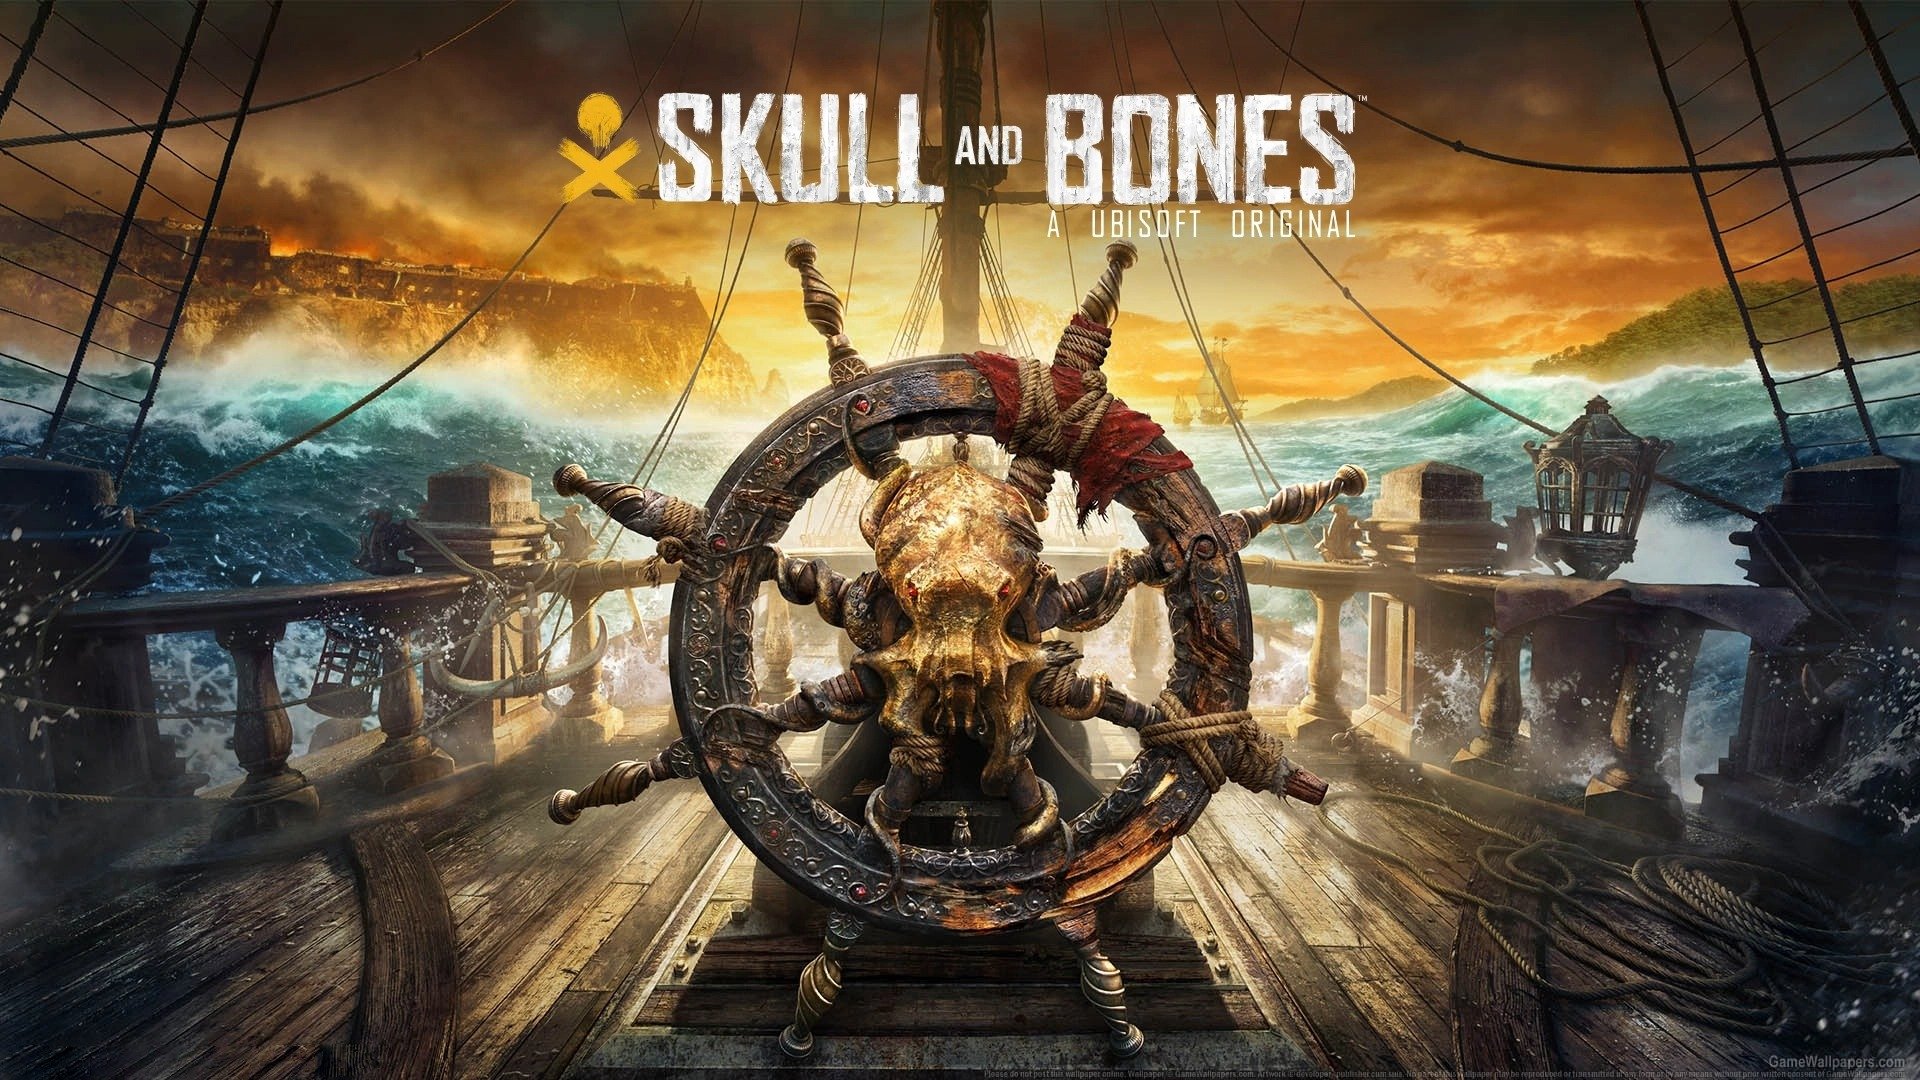 Skull and Bones : malgré l'attente interminable, voici de quoi patienter